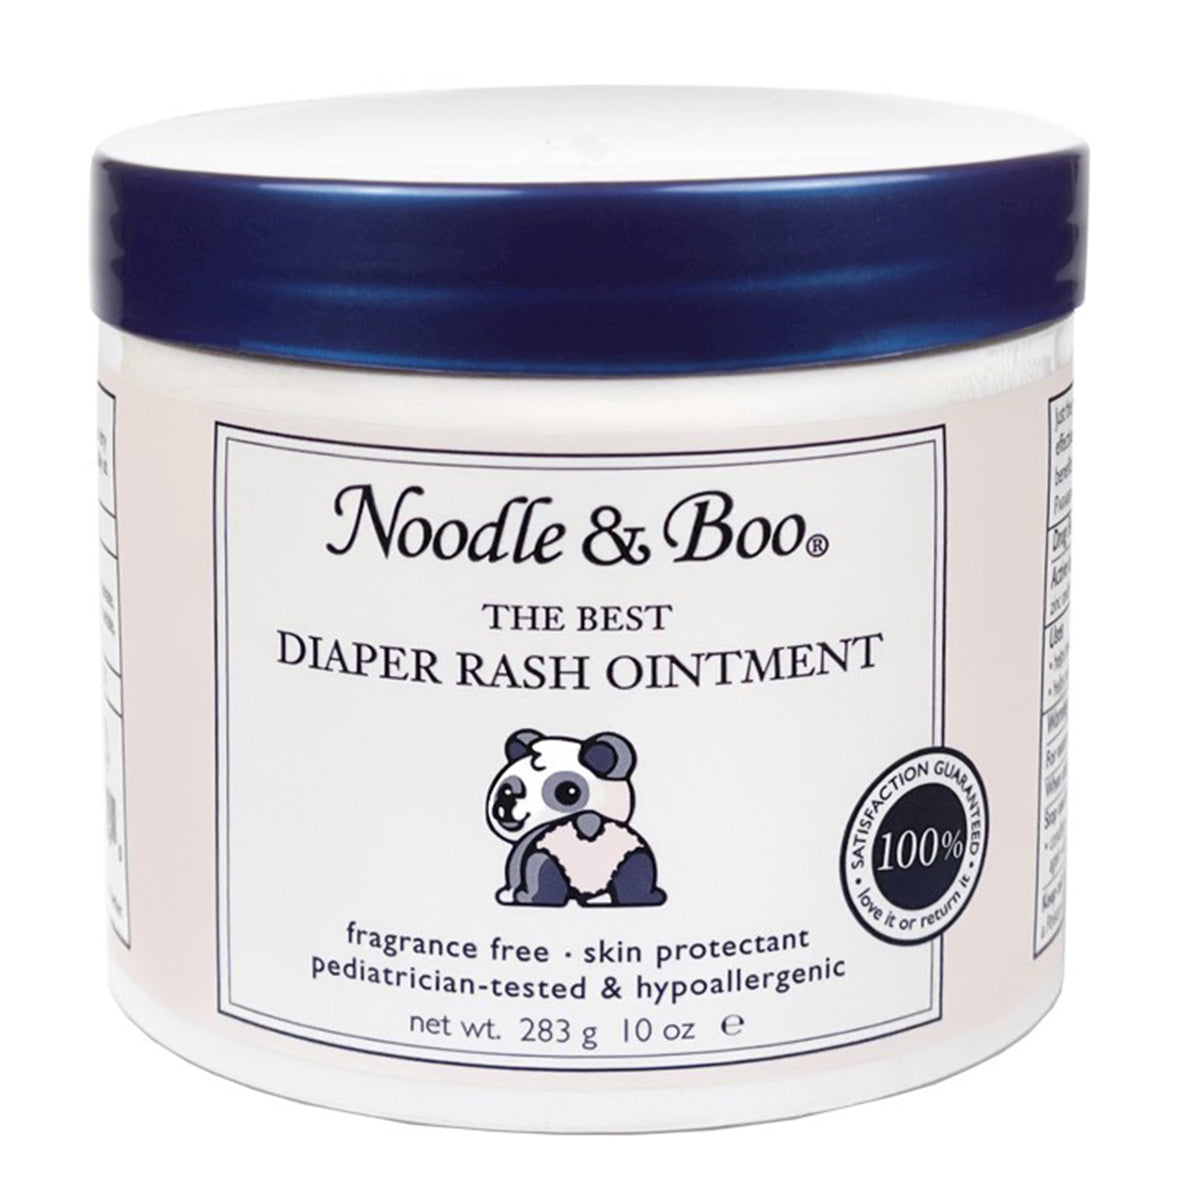 Noodle & Boo Best Diaper Rash Ointment